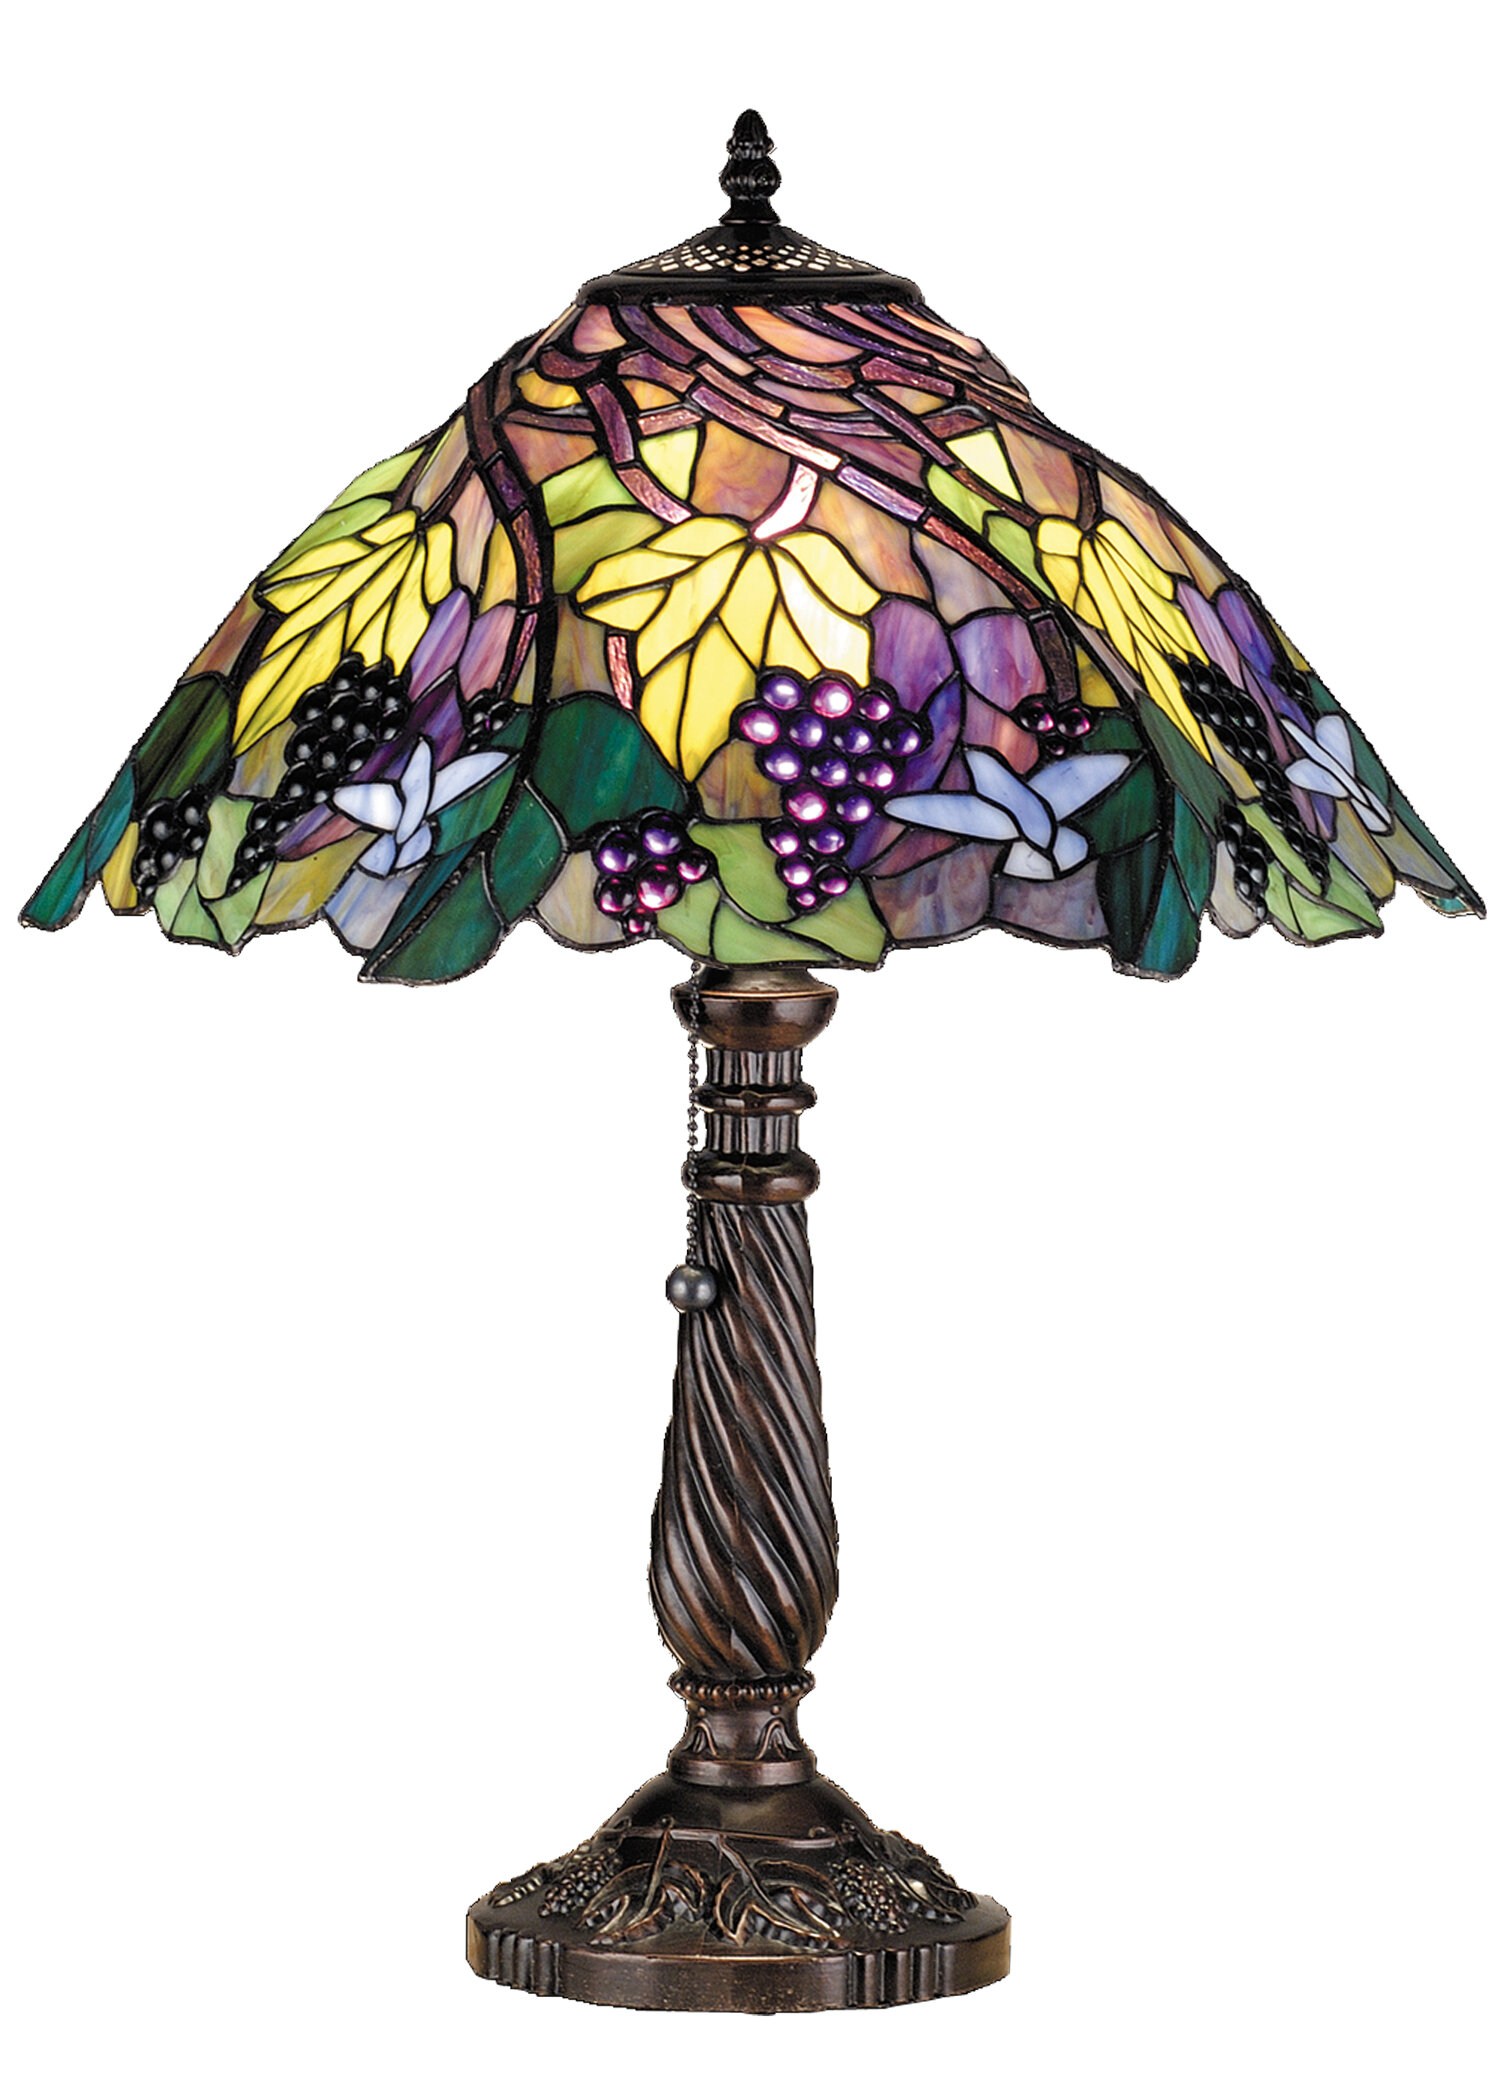 Meyda Tiffany Tiffany Floral Animals Spiral Grape 22 H Table Lamp With Bowl Shade